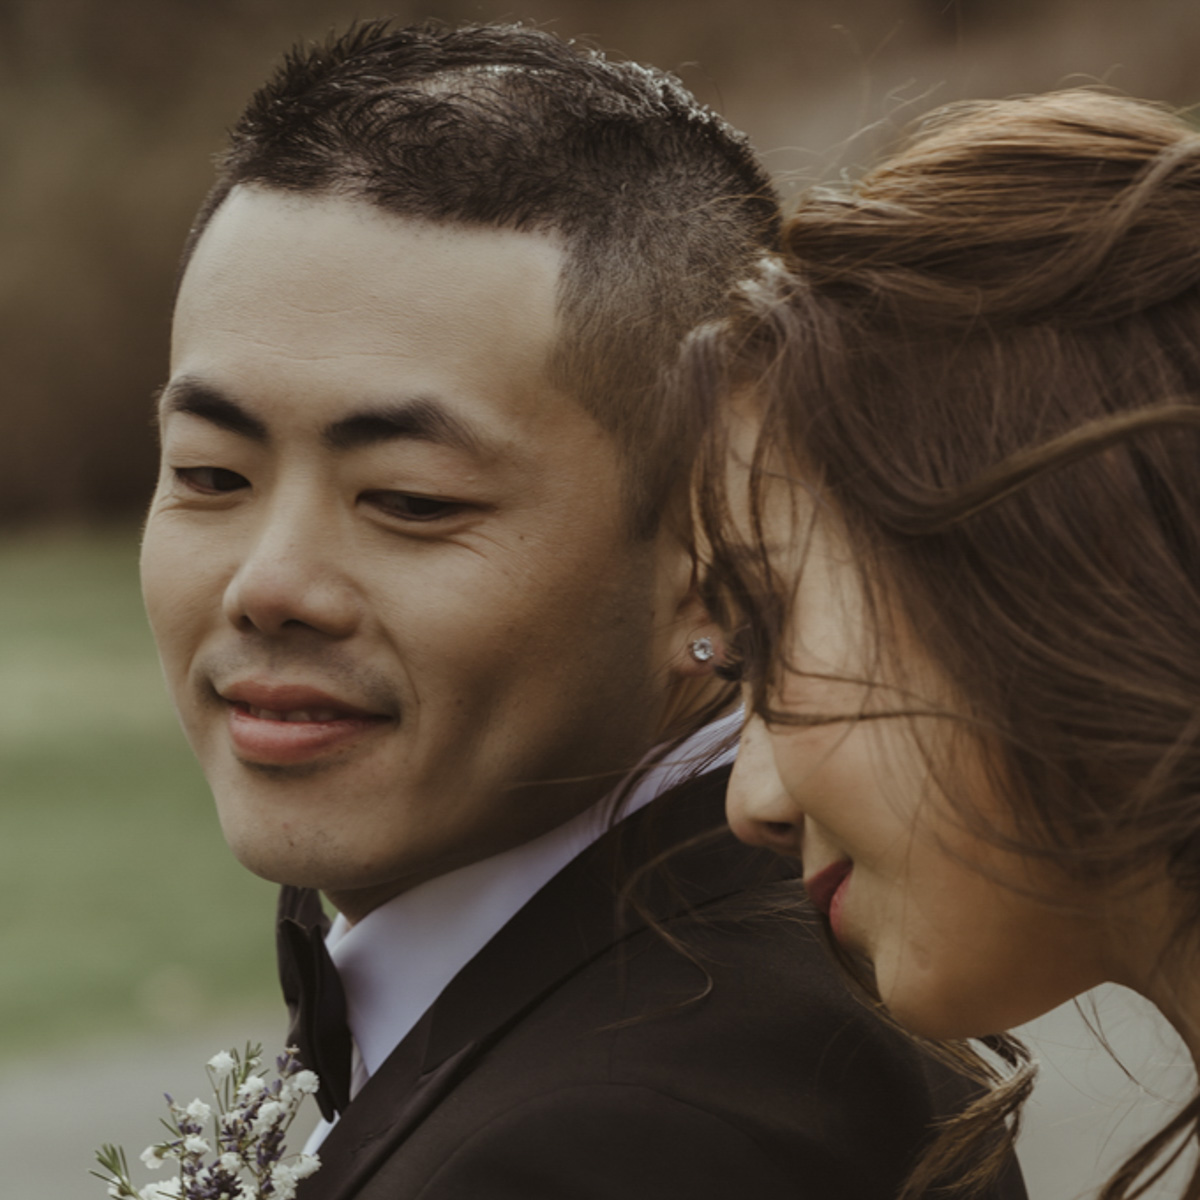 Home testimonial couple shooting 2 - Documentary Wedding Photographer | Reflect Your True Beauty 21